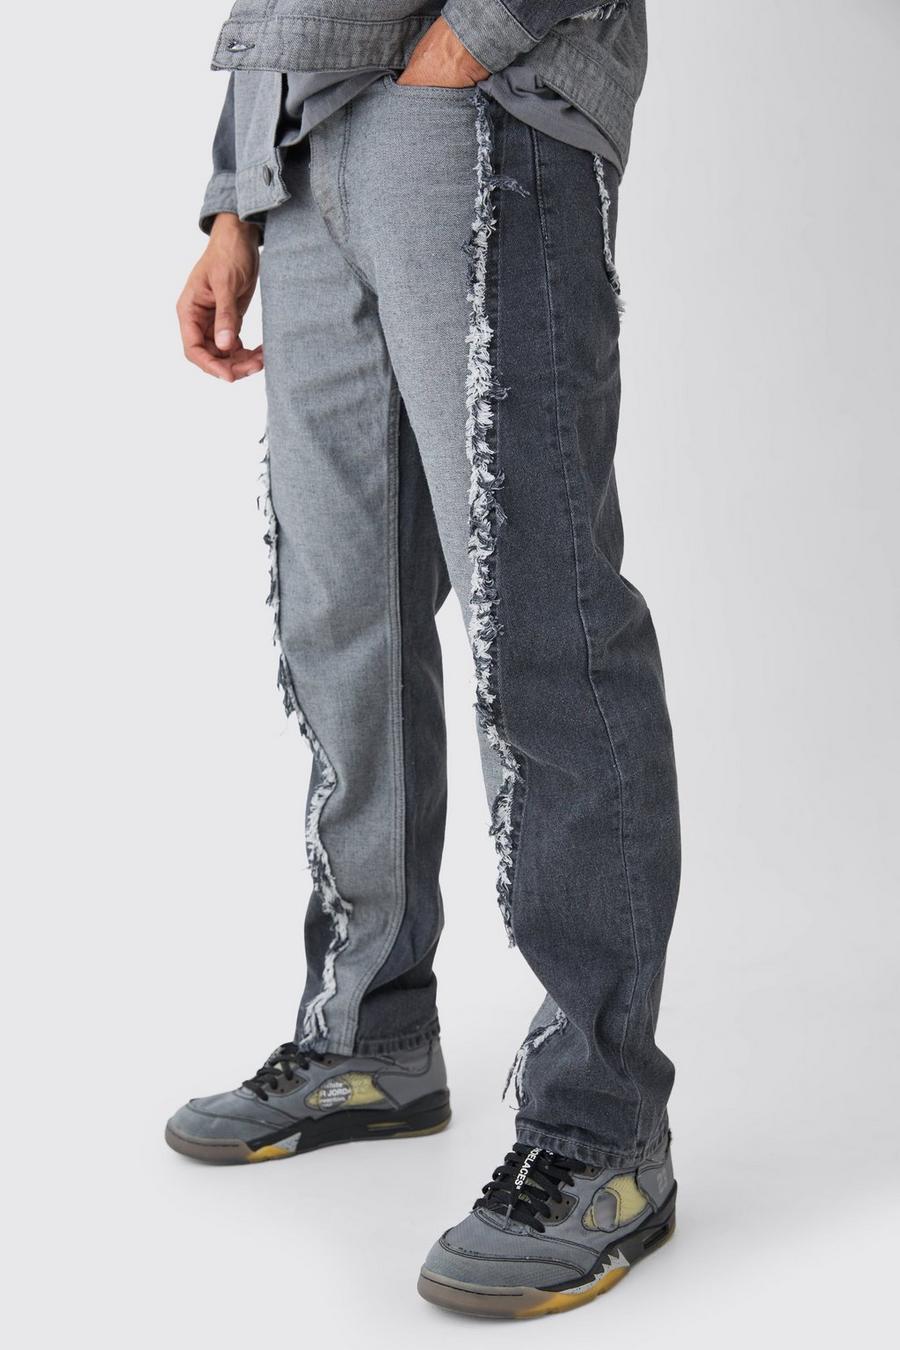 https://media.boohoo.com/i/boohoo/bmm53066_mid%20grey_xl/male-mid%20grey-relaxed-rigid-spliced-frayed-edge-jeans/?w=900&qlt=default&fmt.jp2.qlt=70&fmt=auto&sm=fit